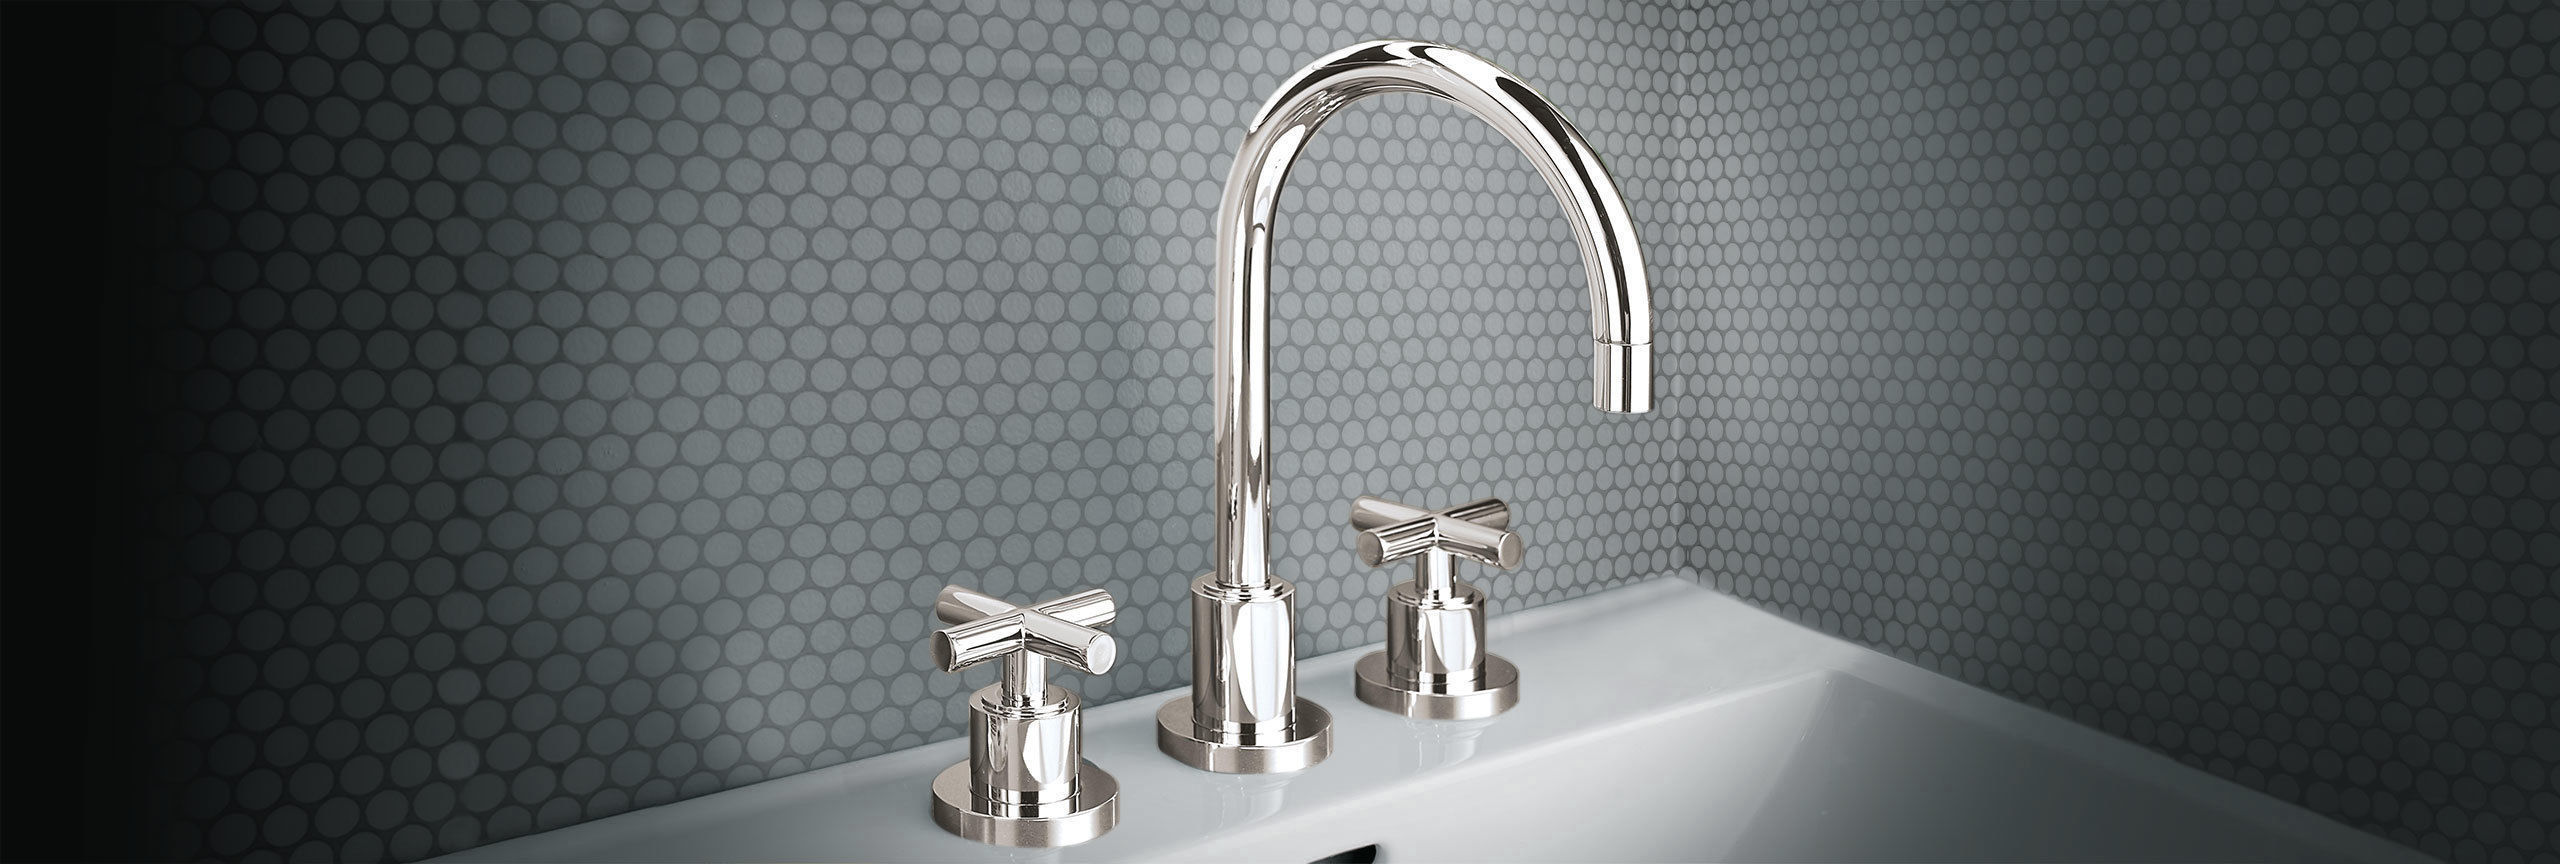 bathroom series Tiburon widespread faucet with cross handles